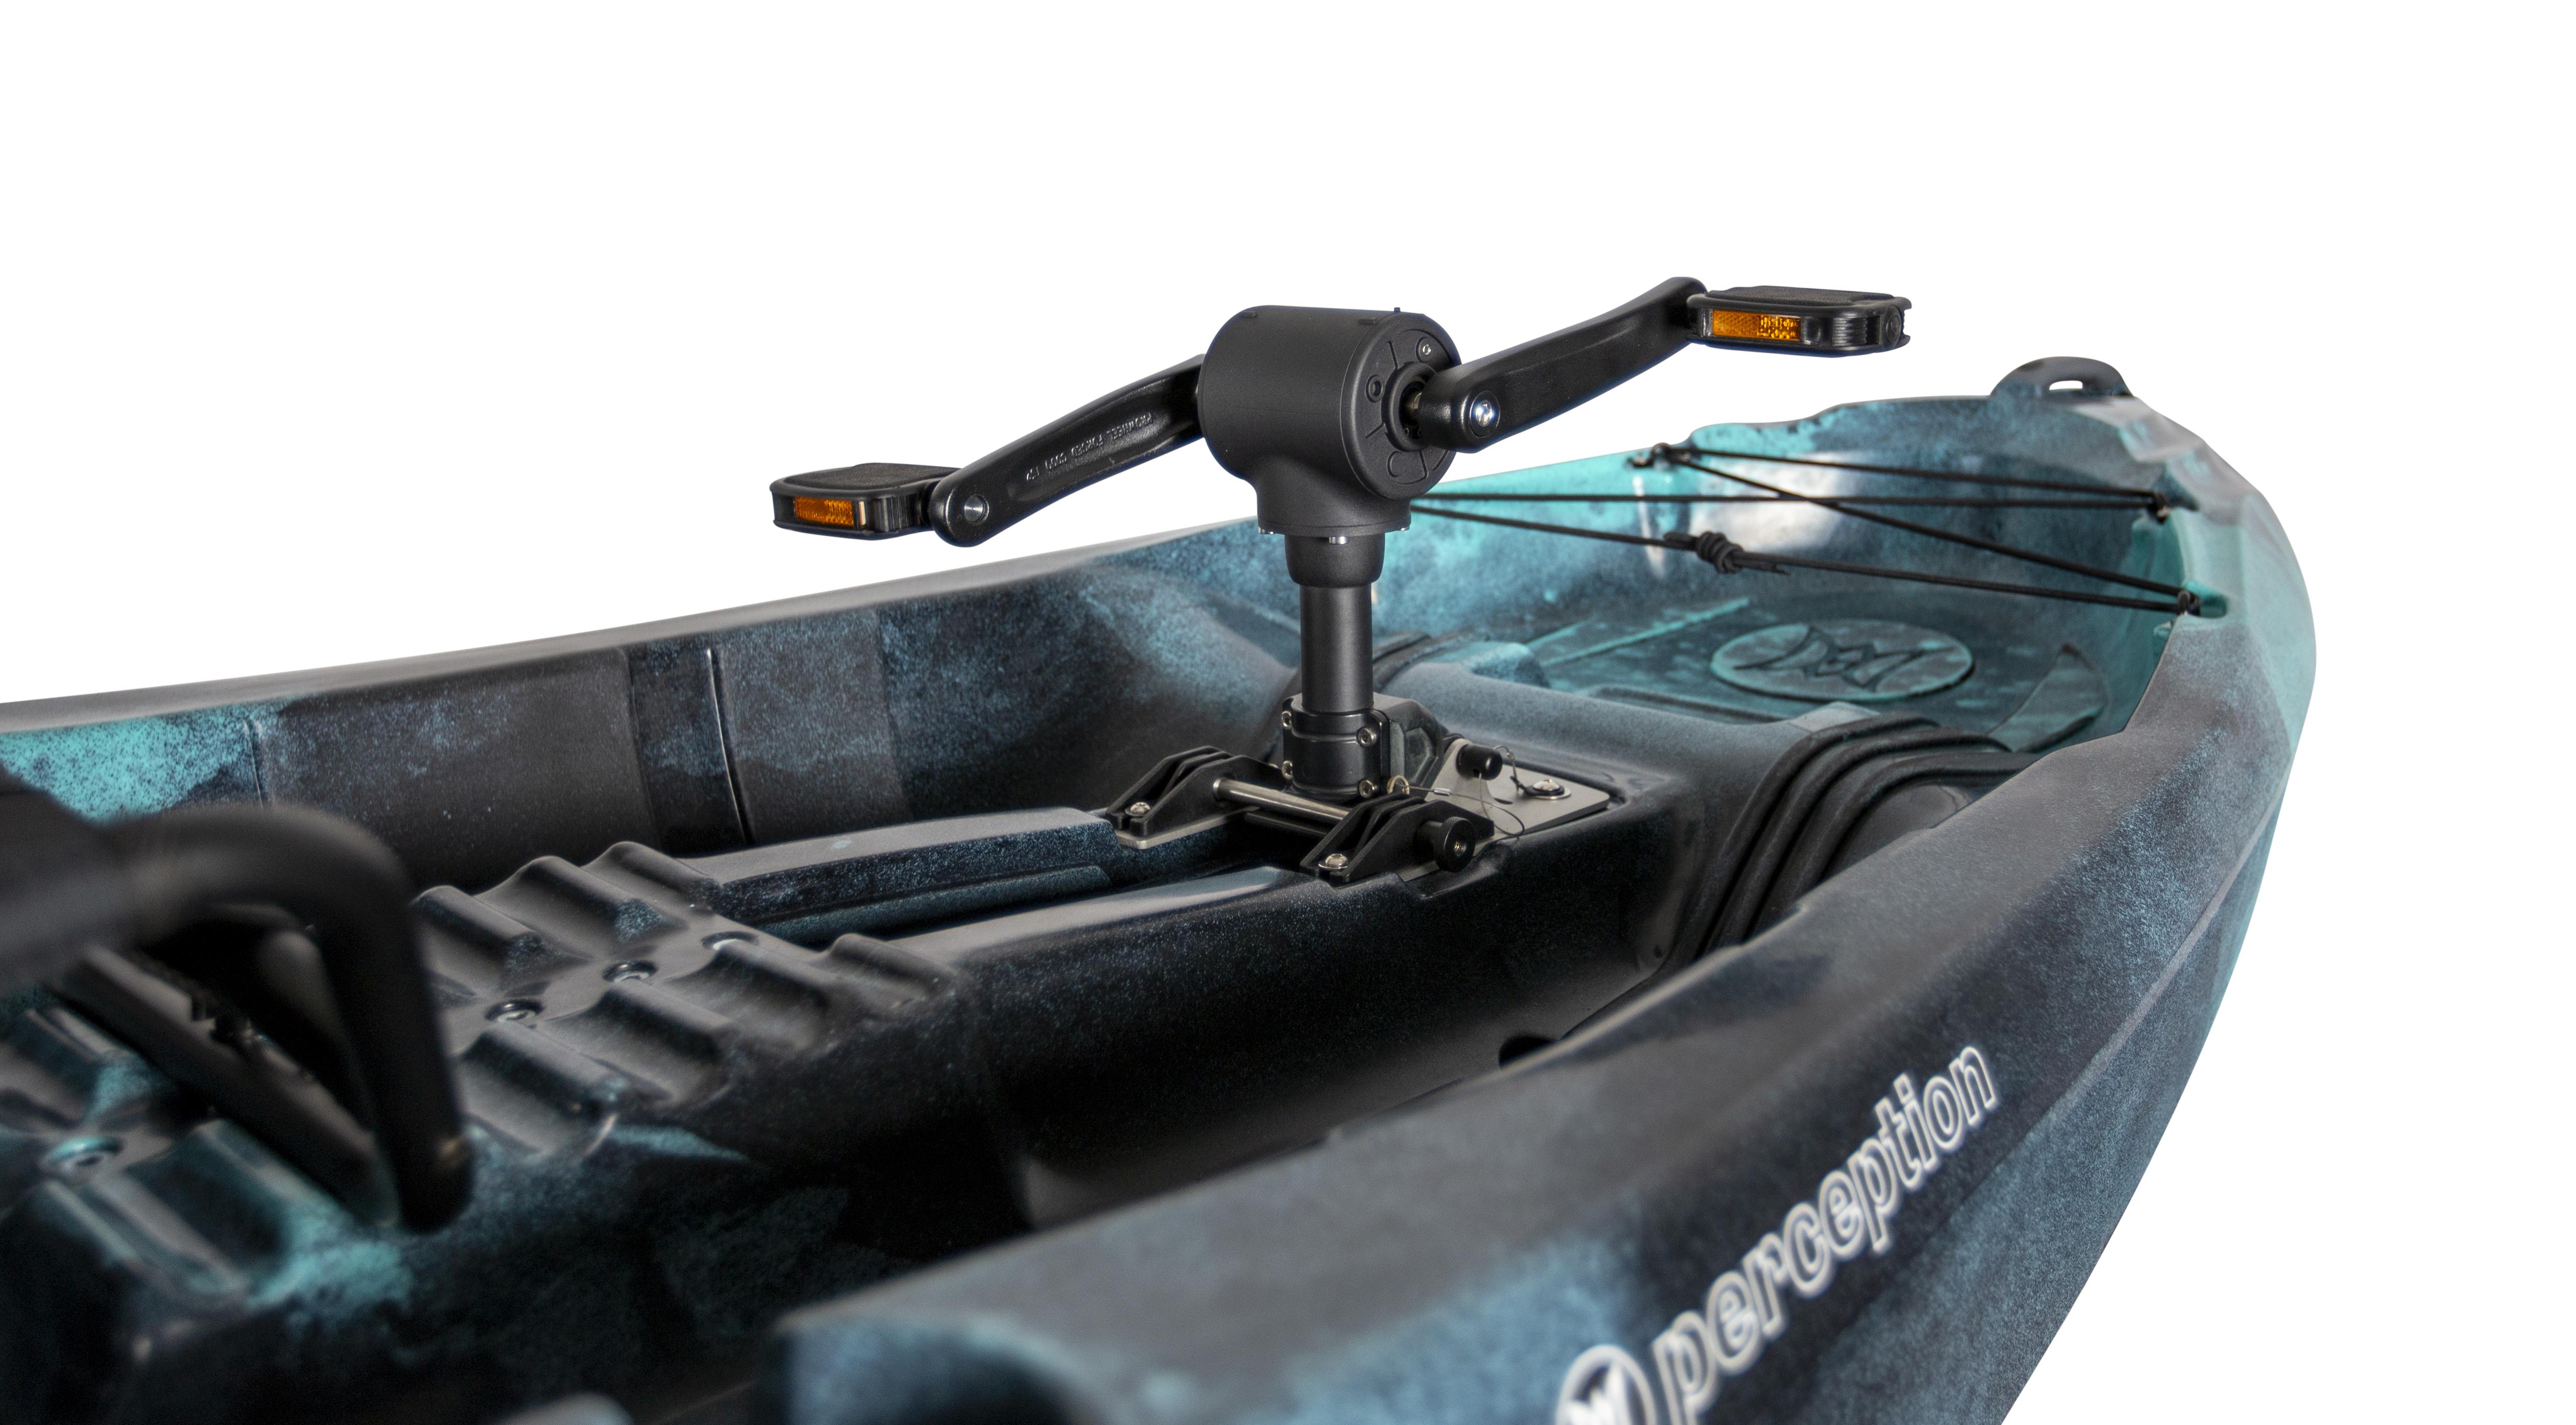 Single Seat Angler Fishing Kayak Pedal Drive - AliExpress